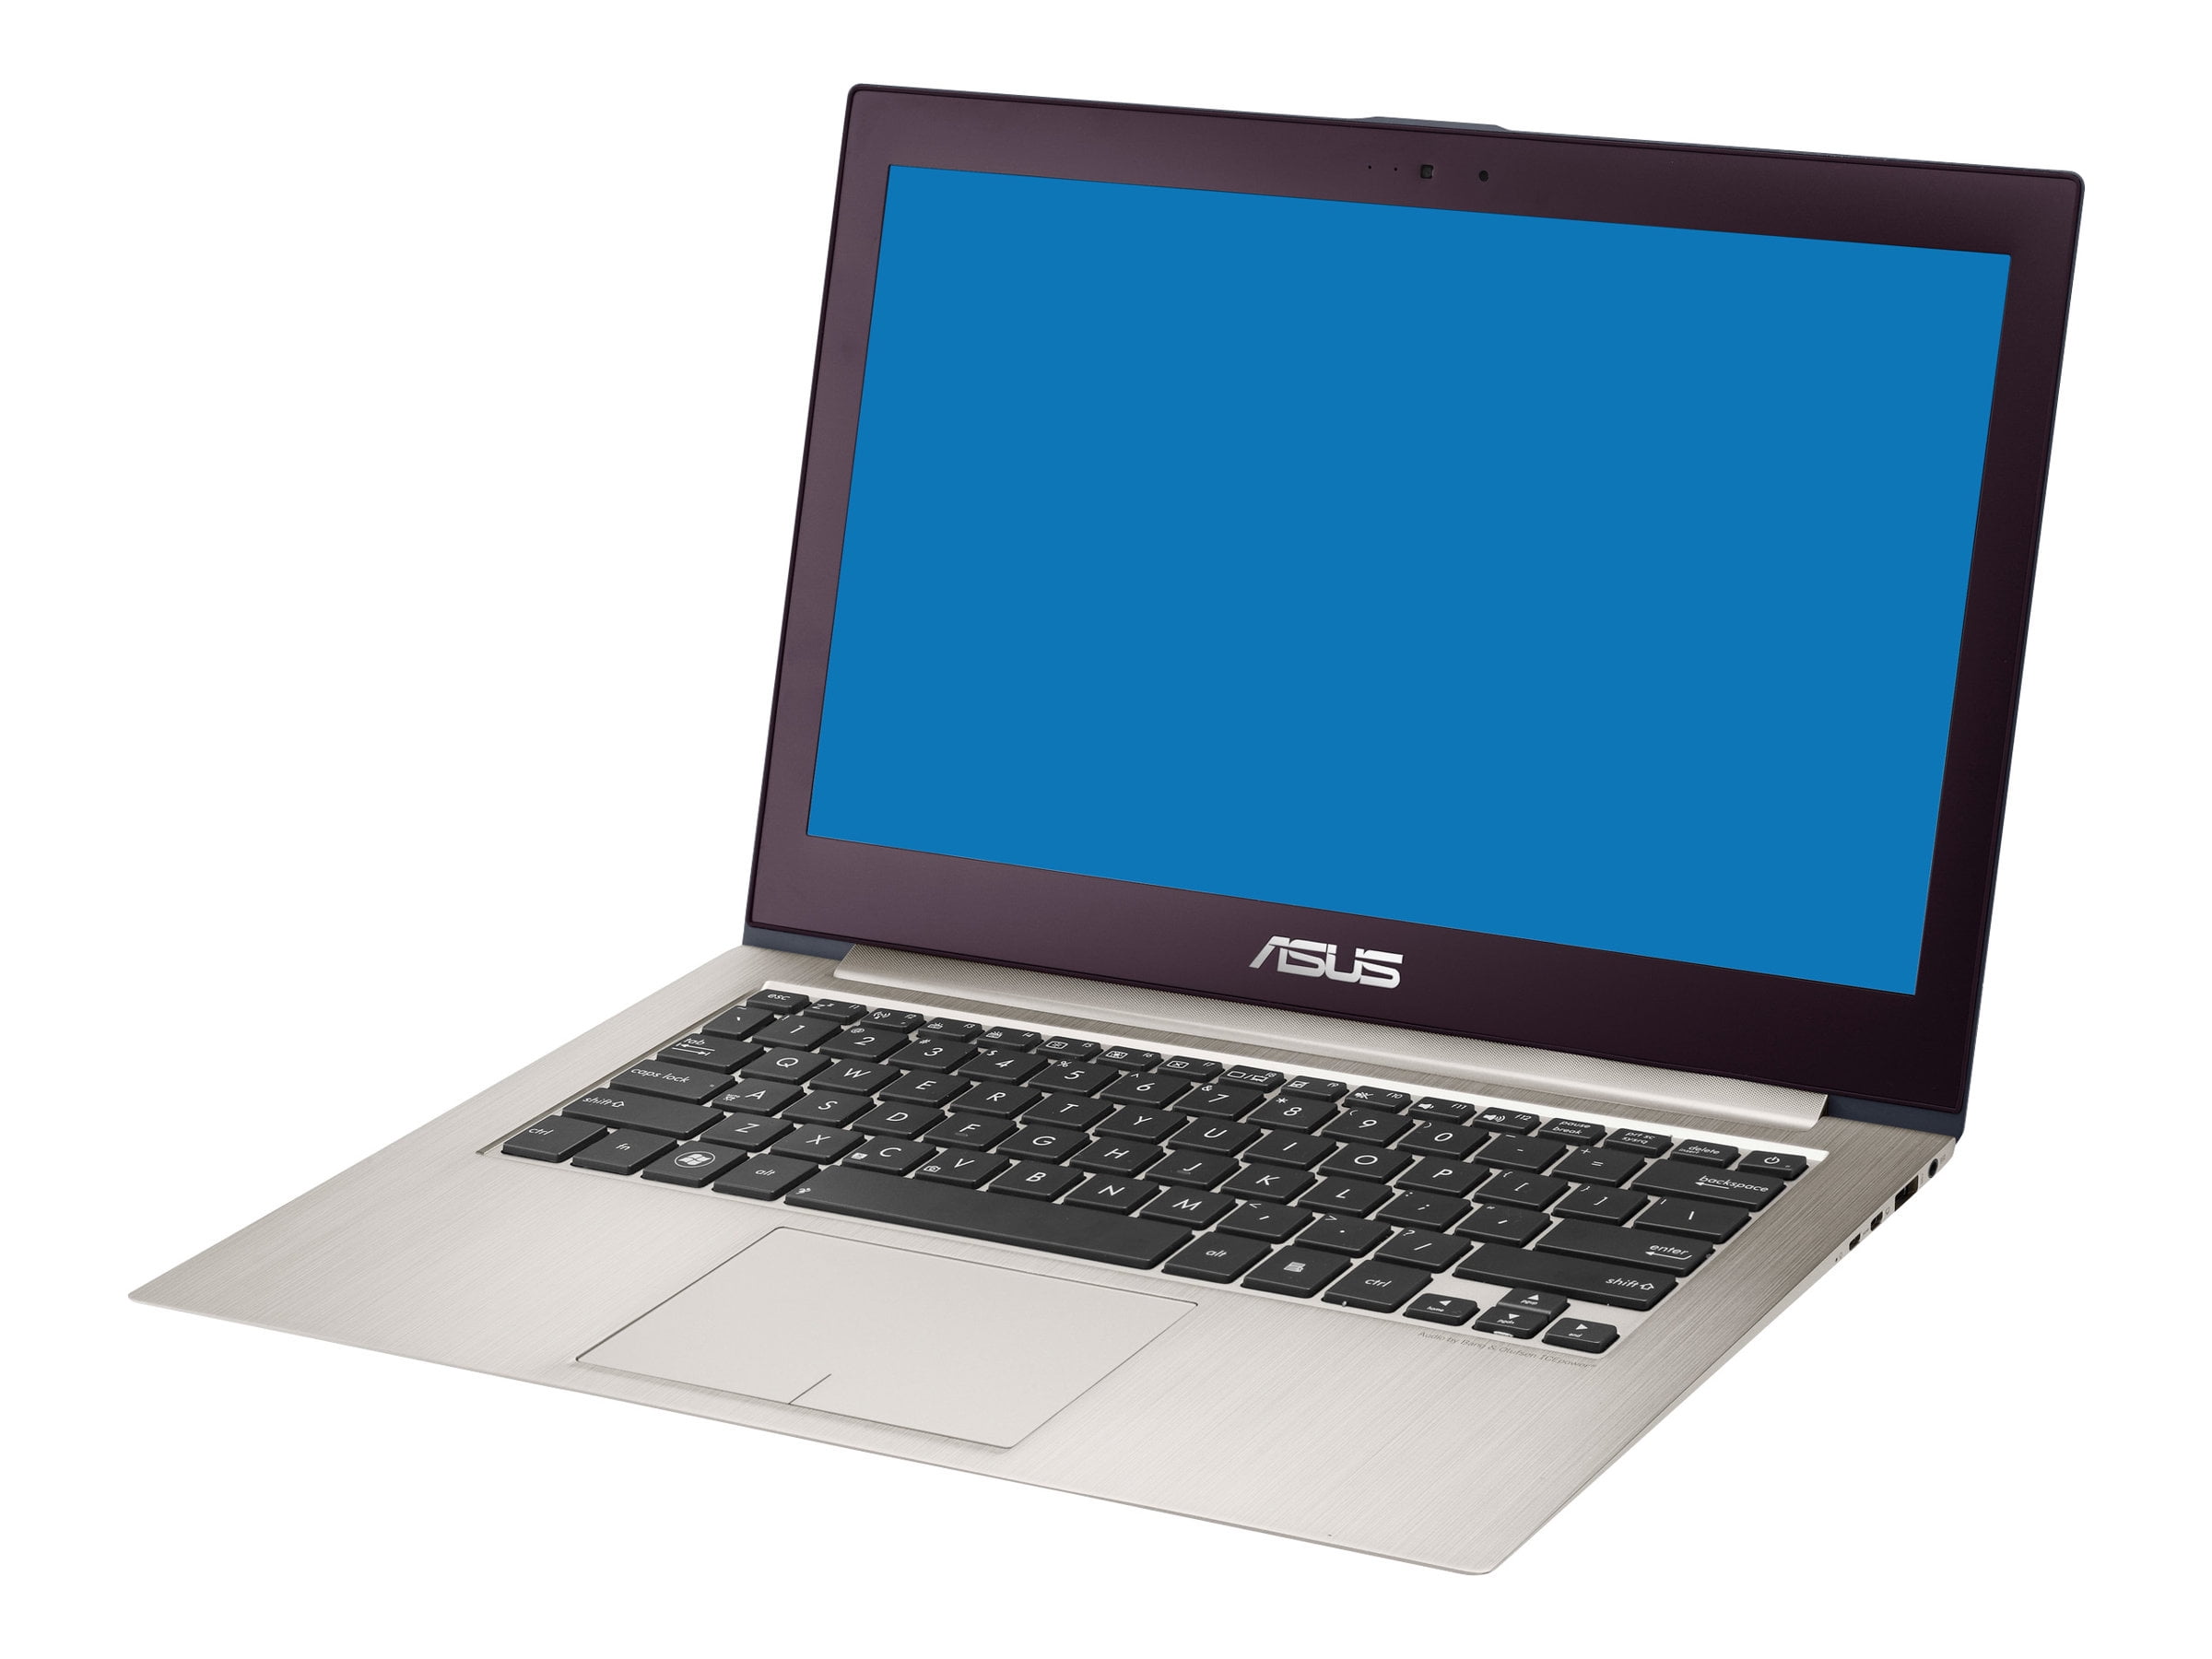 ASUS ZENBOOK Prime UX31A-DH51 - Ultrabook - Intel Core i5 3317U / 1.7 GHz Win 8 64-bit - HD Graphics 4000 - 4 GB RAM - 128 GB SSD - 13.3" IPS 1920 x (Full HD) - silver - Walmart.com